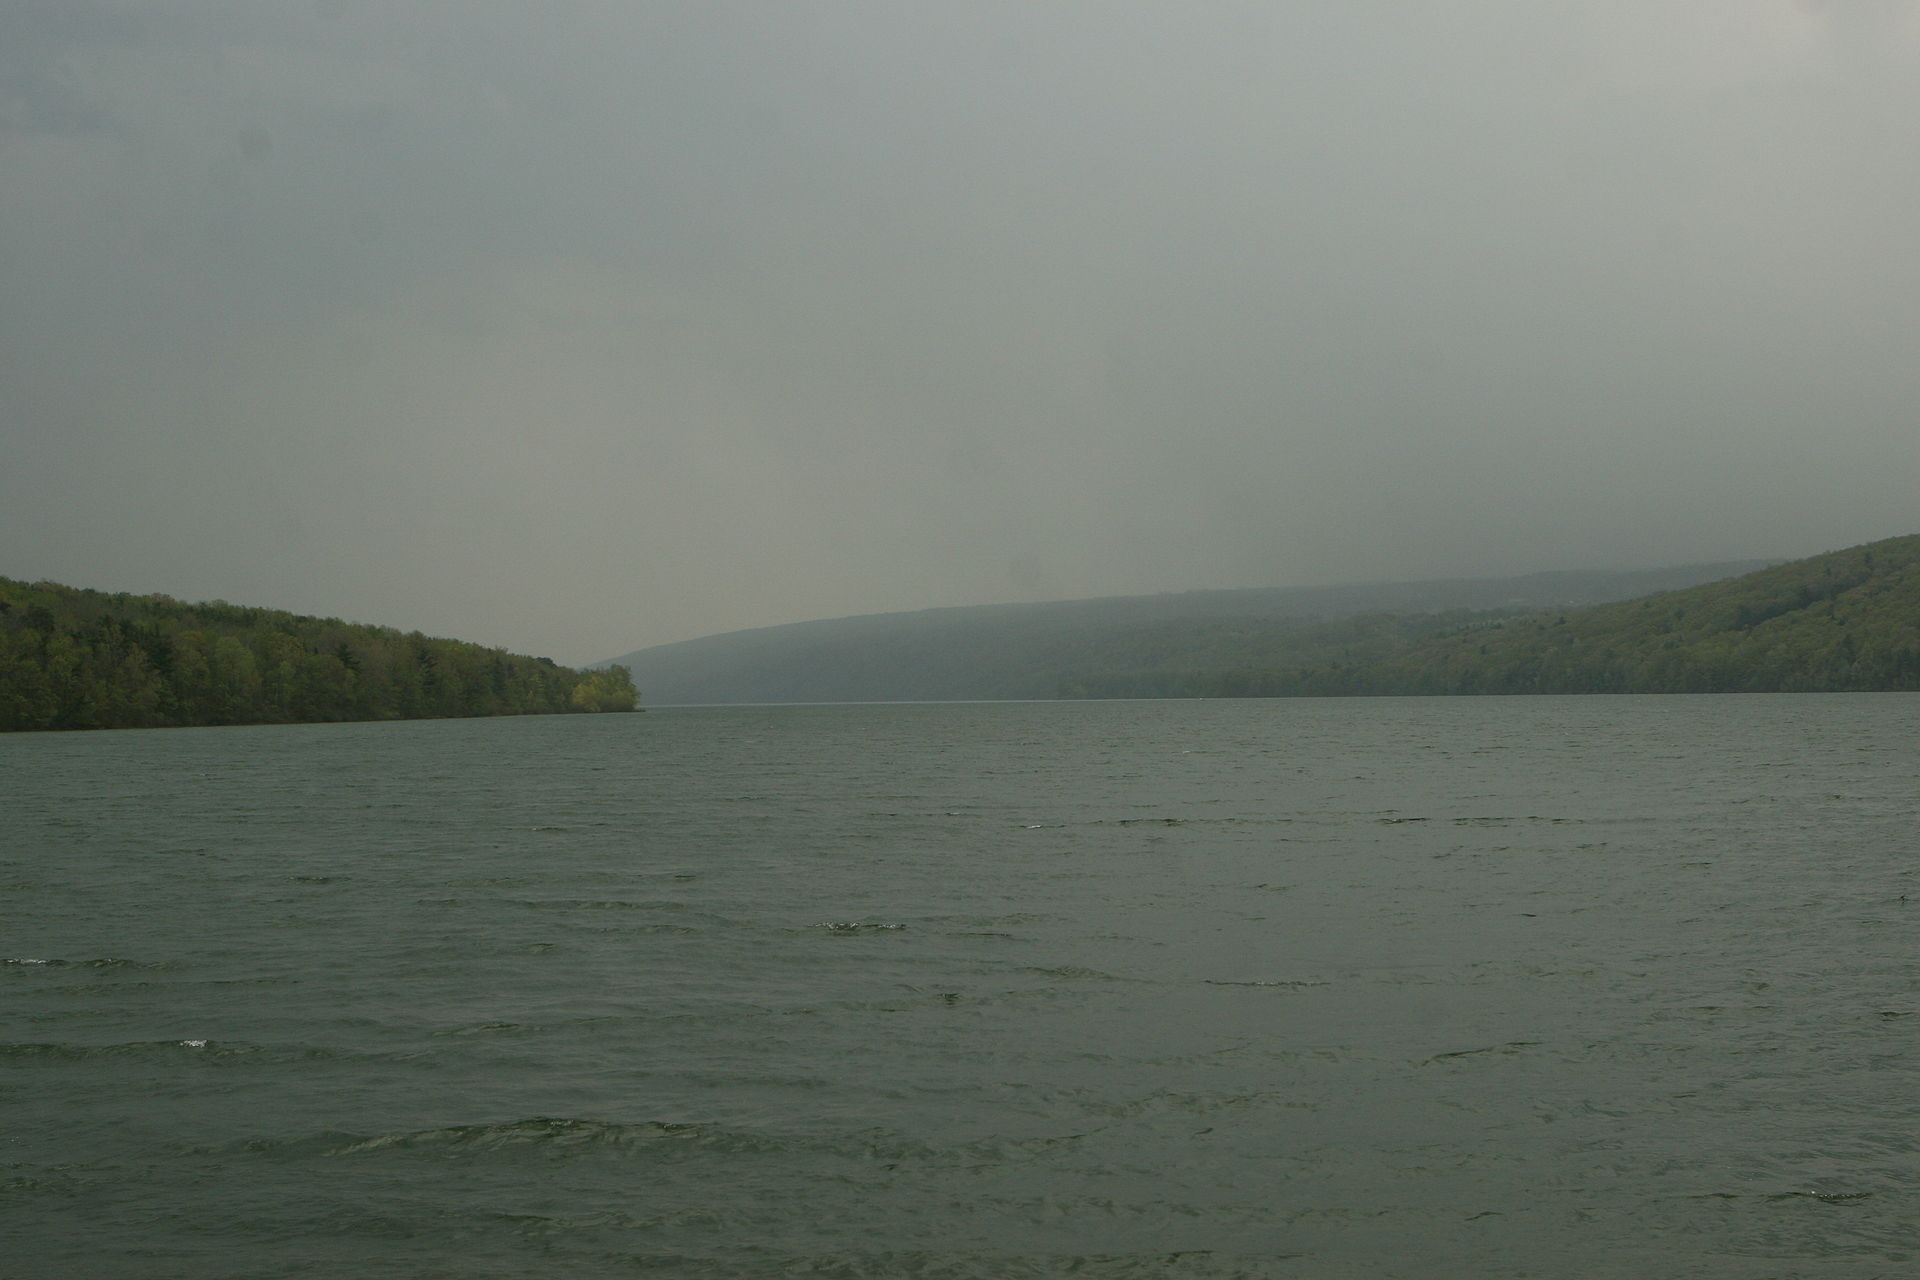 One of the western Finger Lakes is called Hemlock Lake